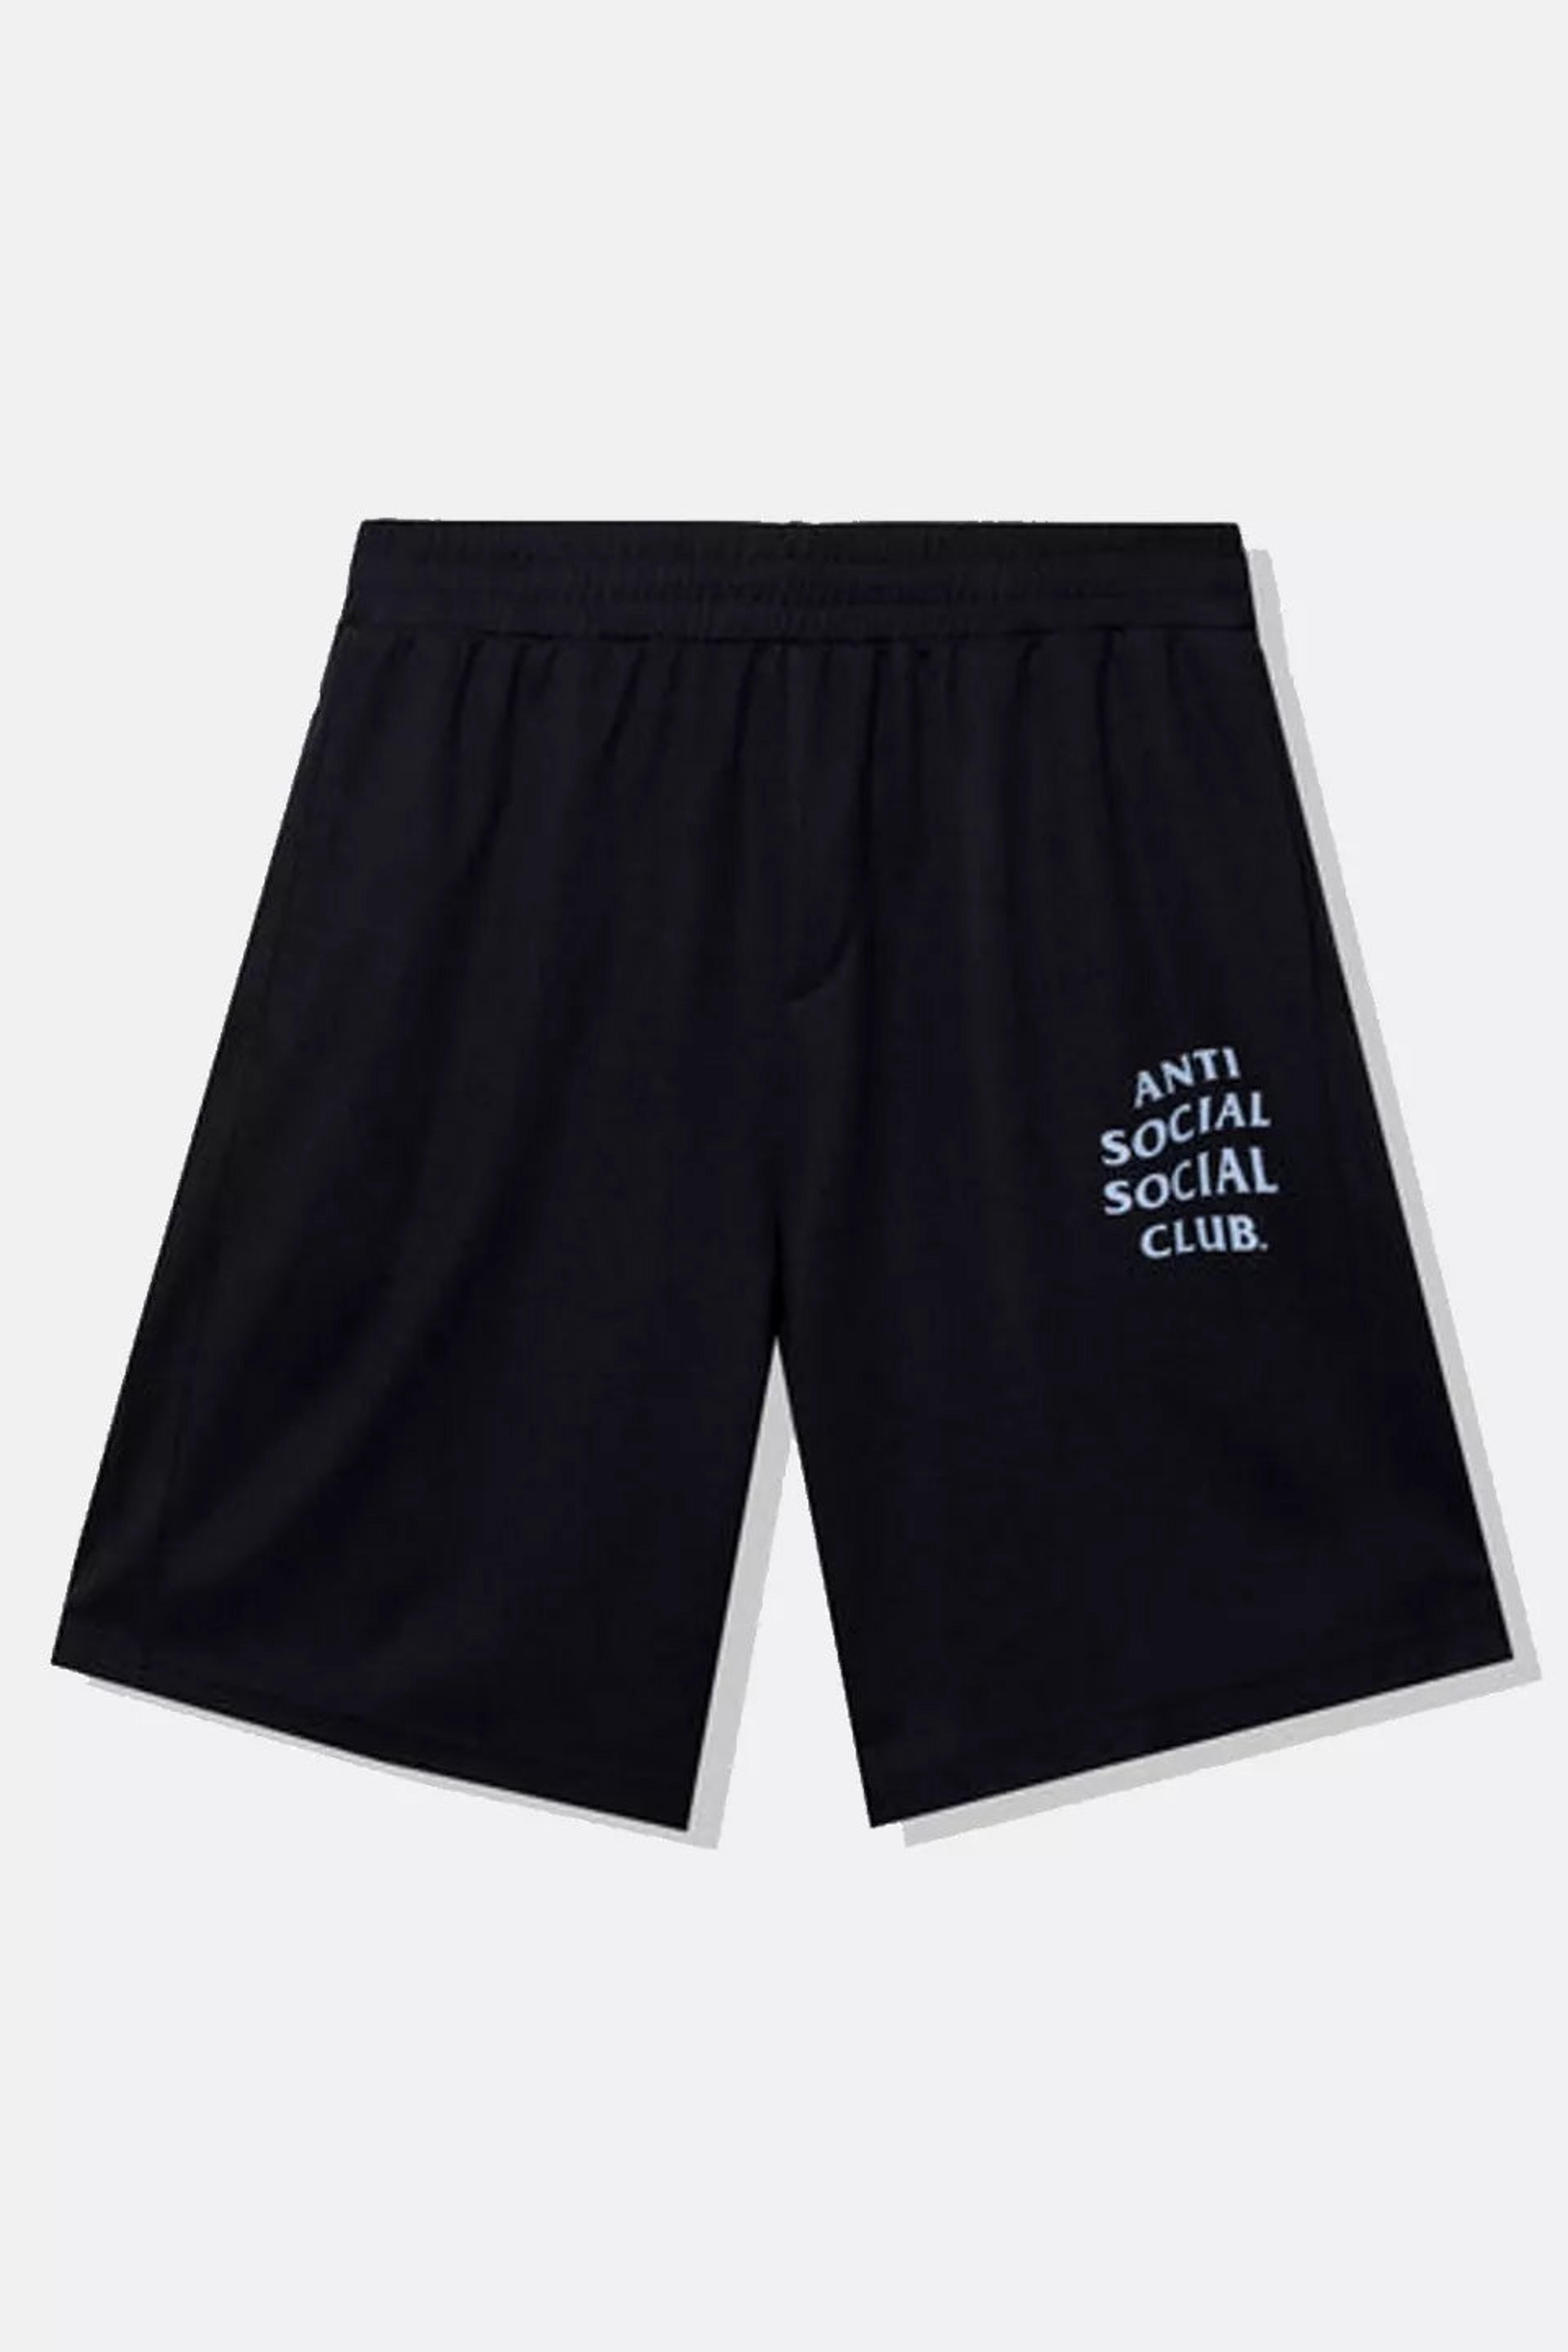 Anti Social Social Club Never Made Black Shorts ASSC DS Brand Ne